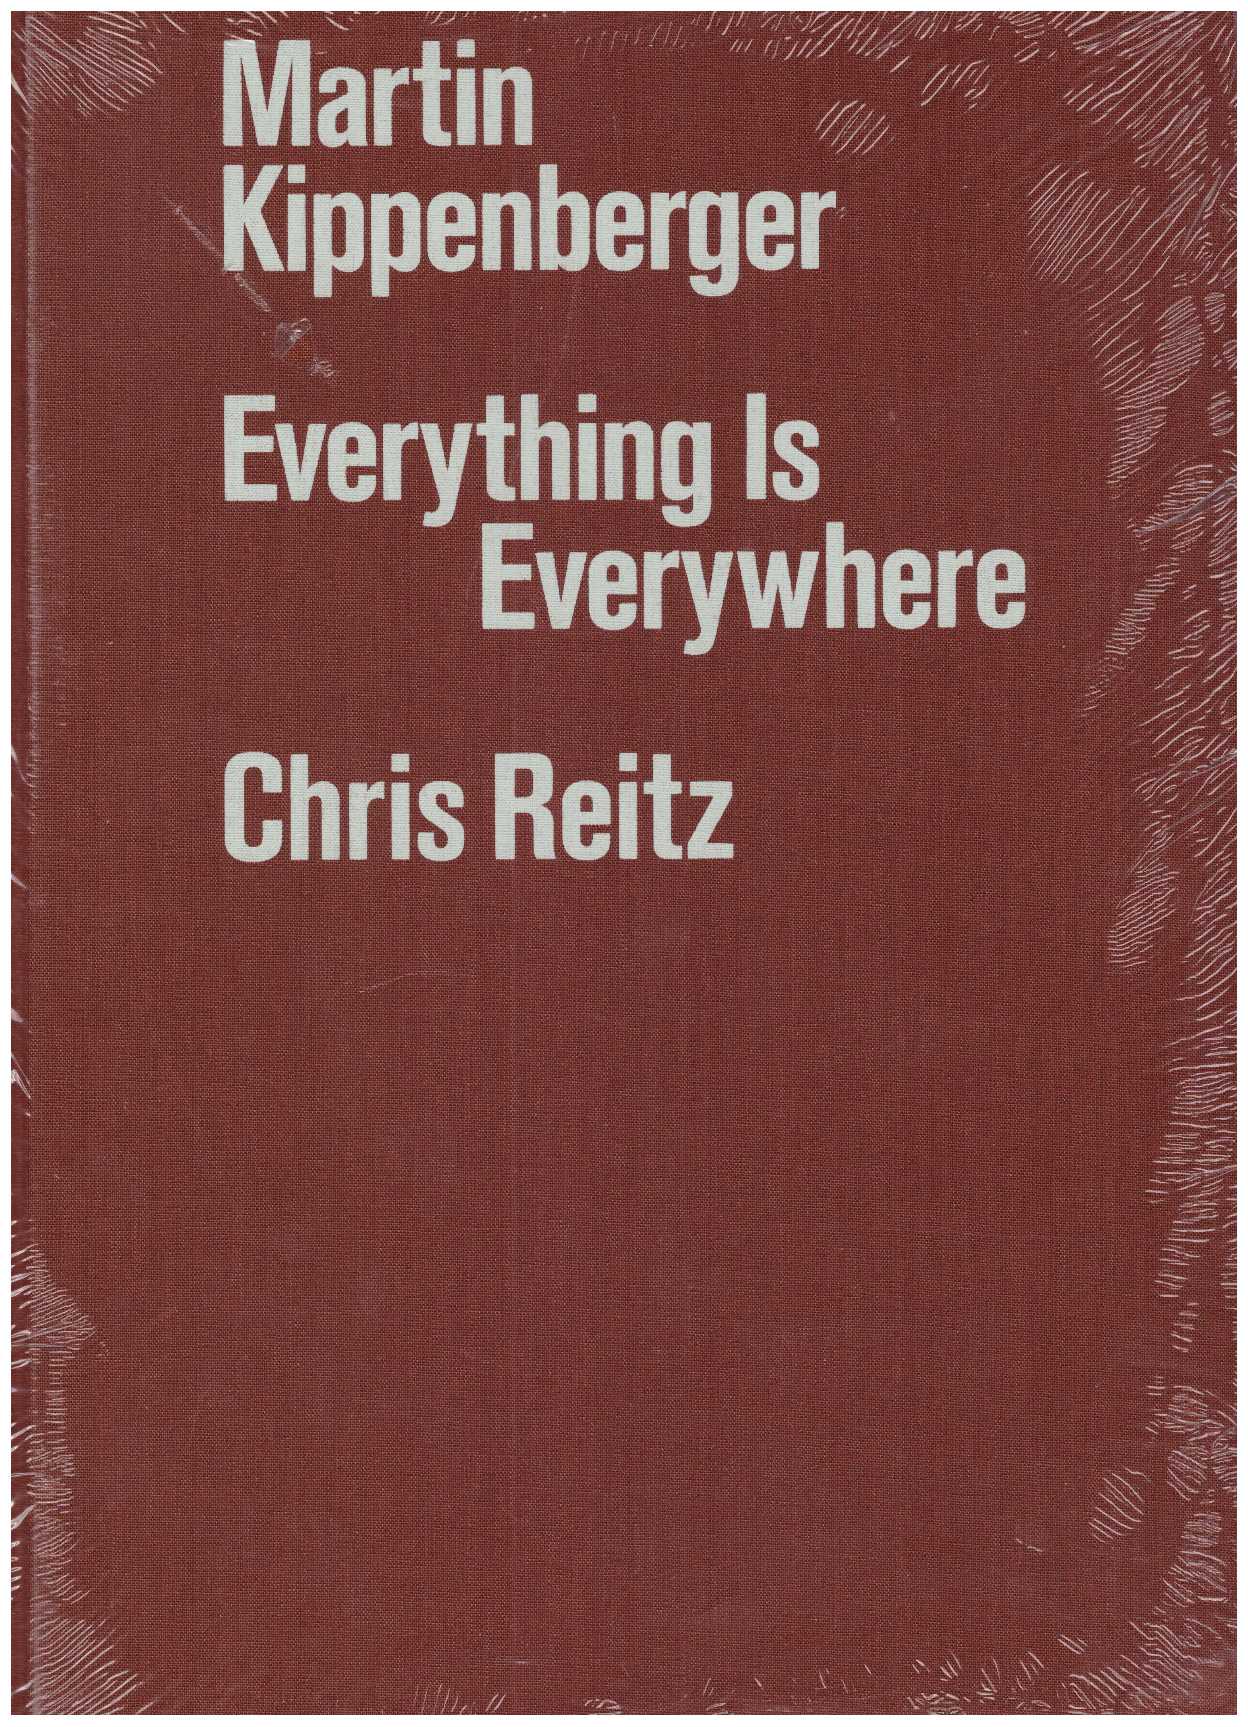 KIPPENBERGER, Martin; REITZ, Chris - Martin Kippenberger: Everything Is Everywhere